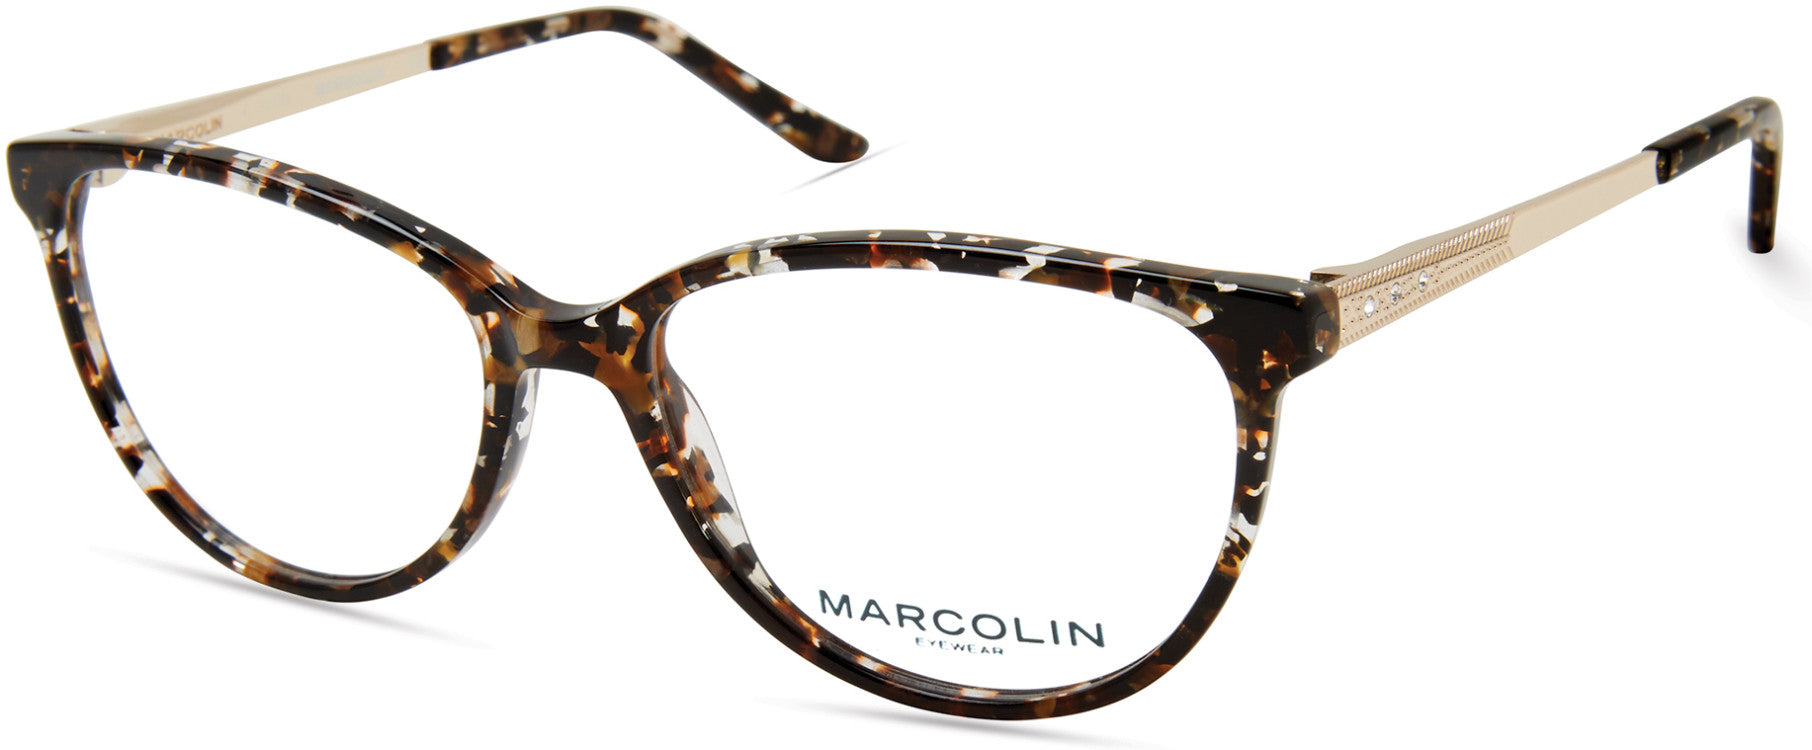 Marcolin MA5019 Square Eyeglasses 056-056 - Havana